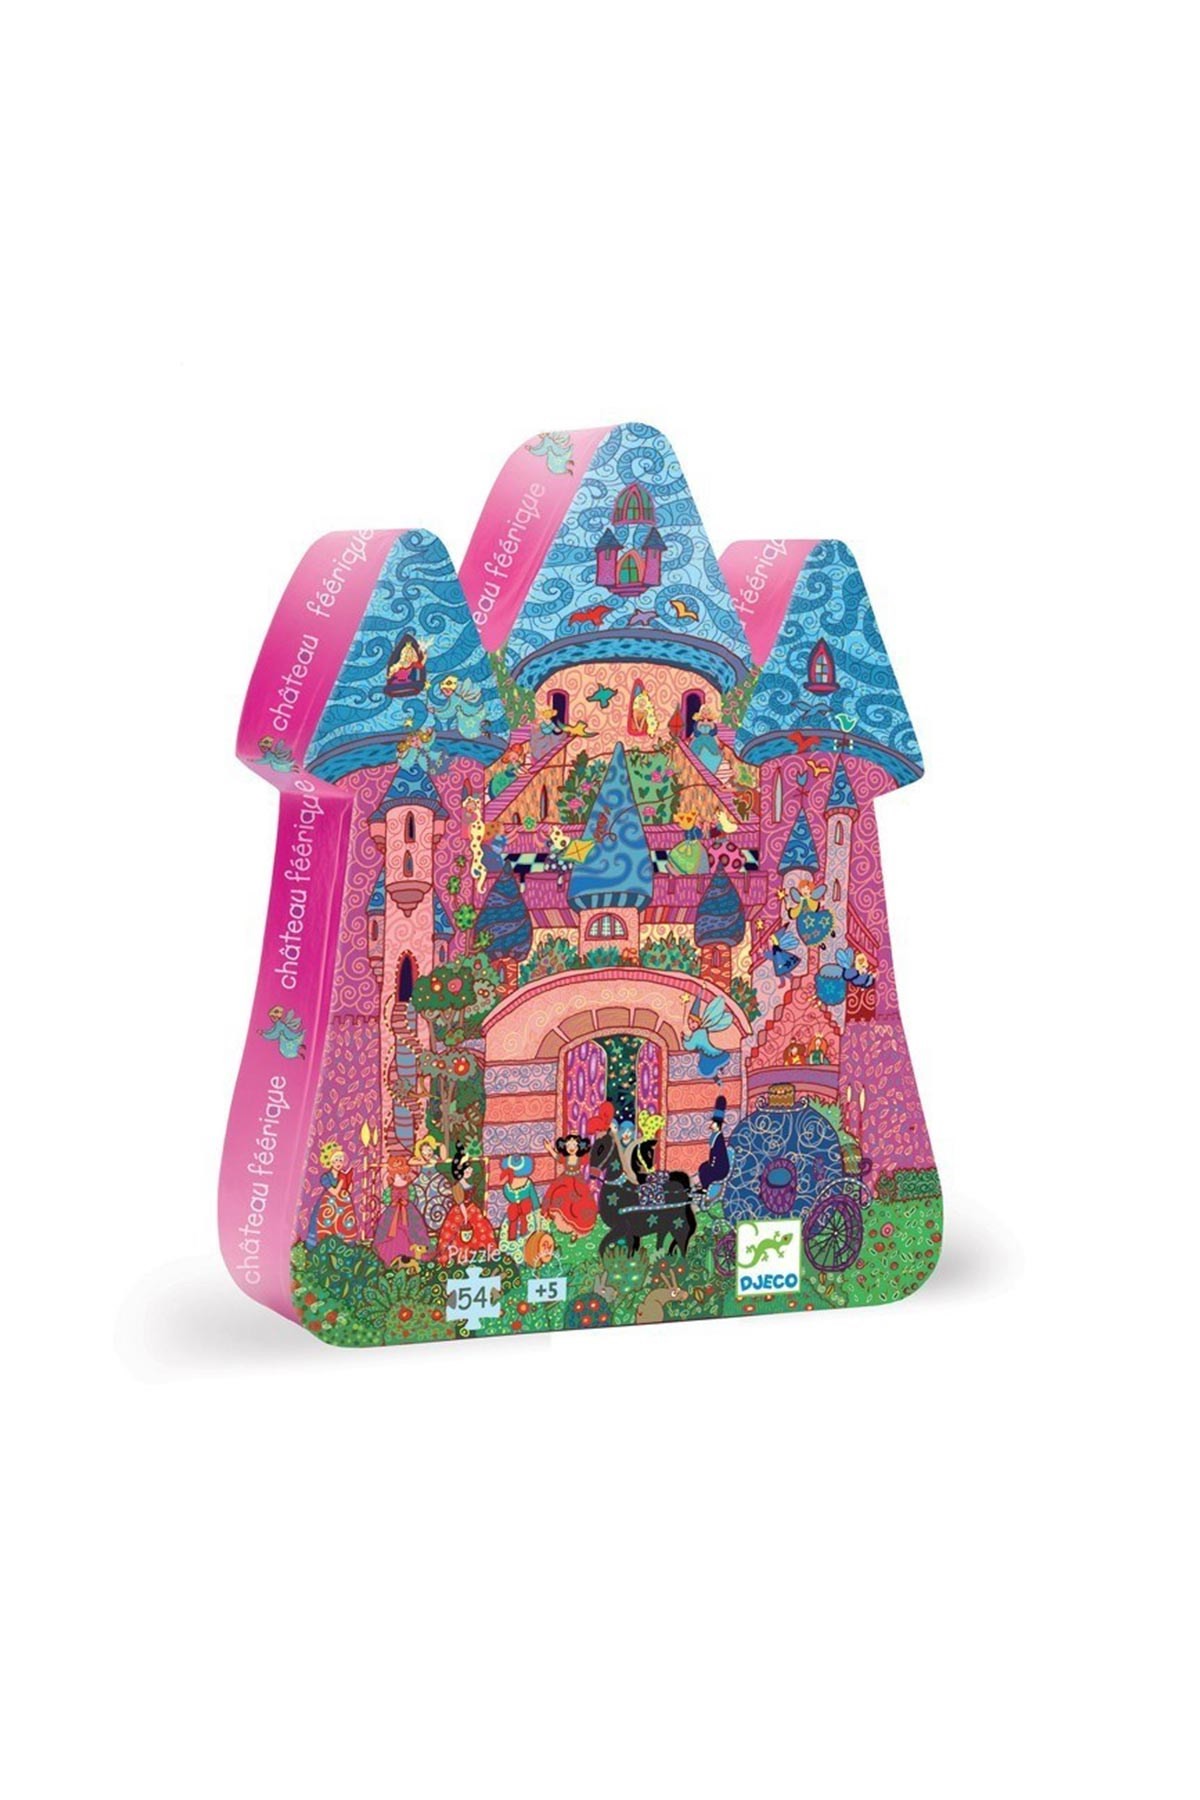 Djeco Dekoratif Puzzle 54 Parça/The Fairy Castle